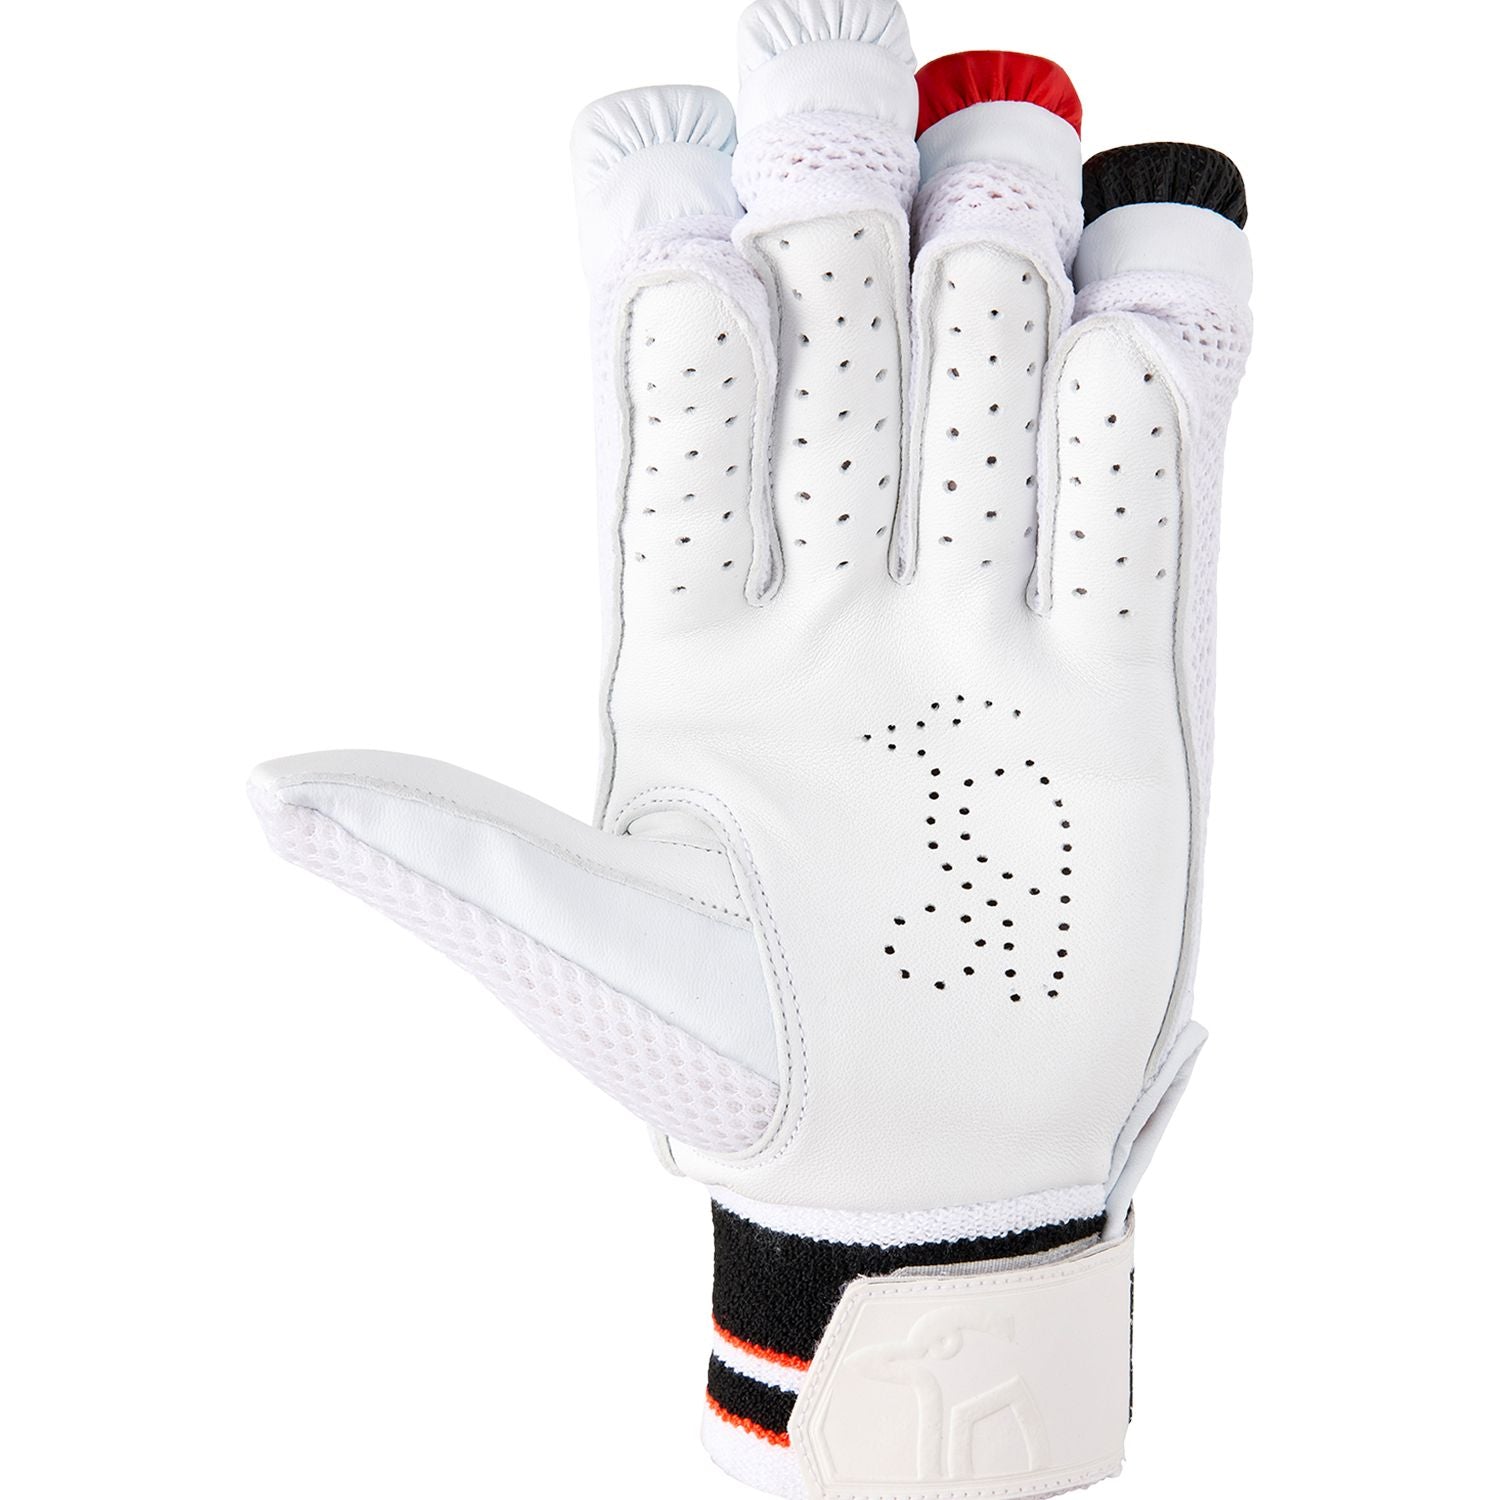 Kookaburra Beast Pro 4.0 Cricket Batting Gloves